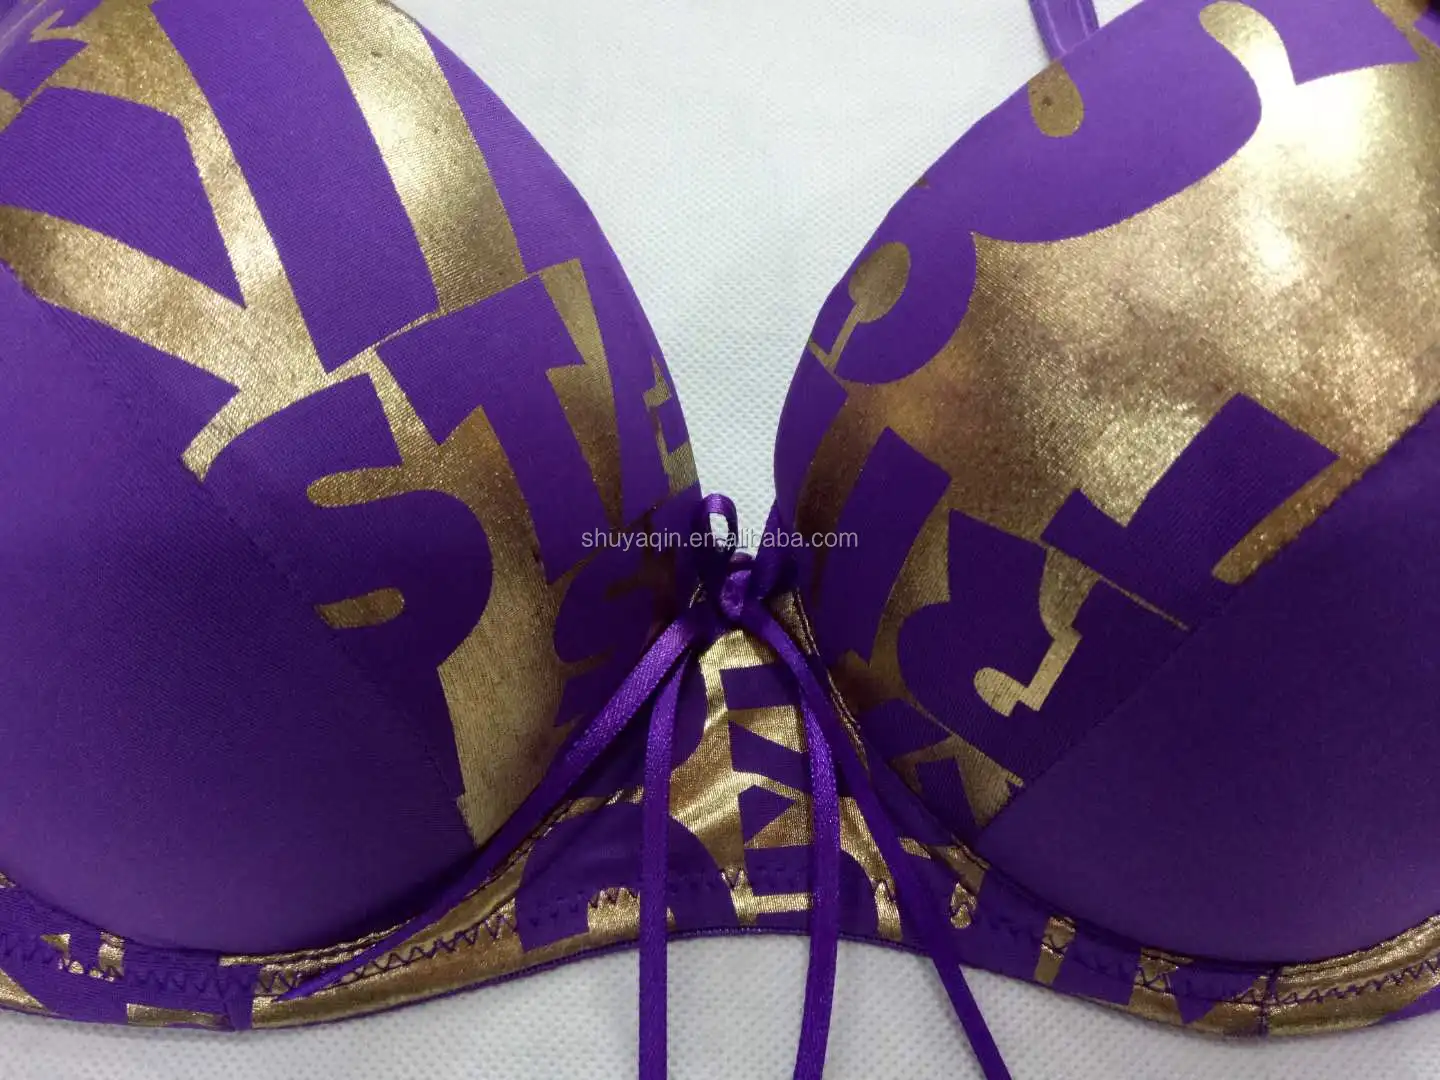 Lubunie-sujetador Push Up Copa Barata Para Mujer 6633 # - Buy New Bra,Women Underwear,Women Product on Alibaba.com